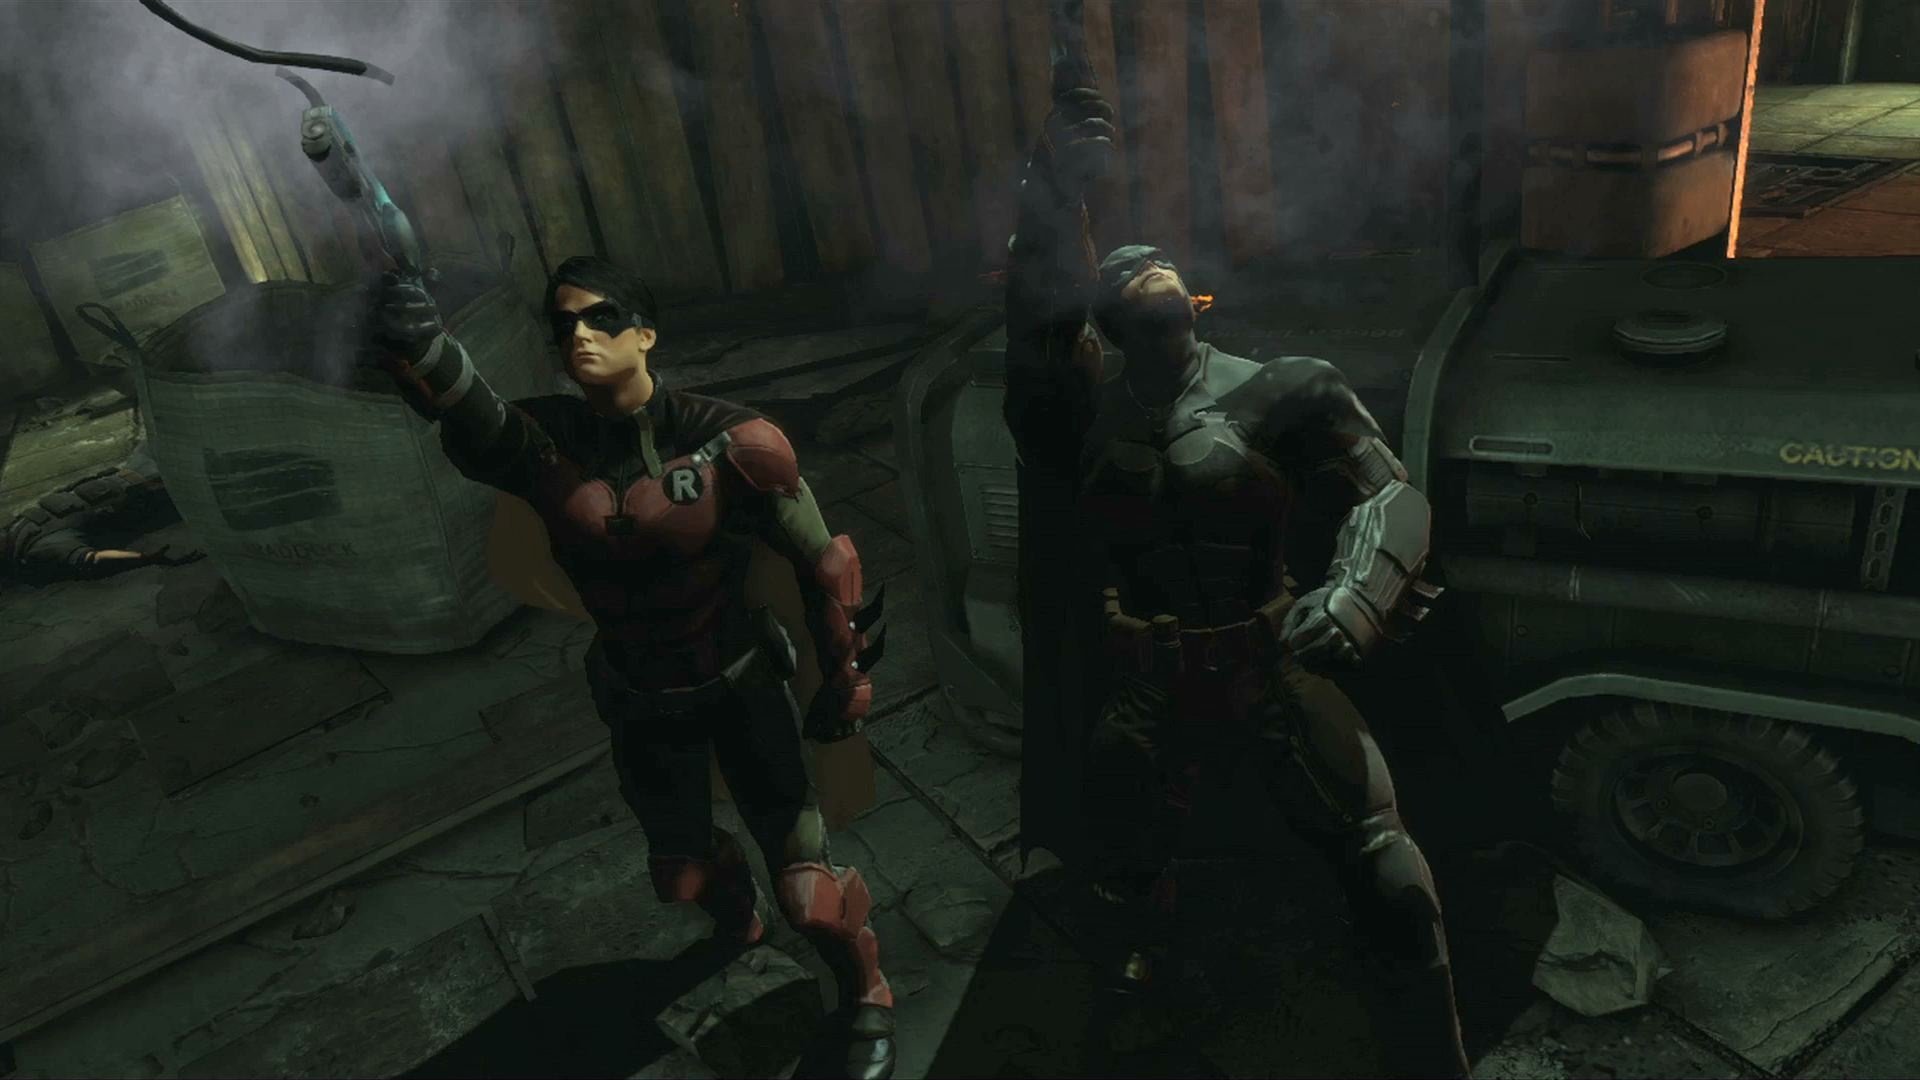 Descarga gratuita de fondo de pantalla para móvil de Batman: Arkham Origins, Hombre Murciélago, Videojuego.